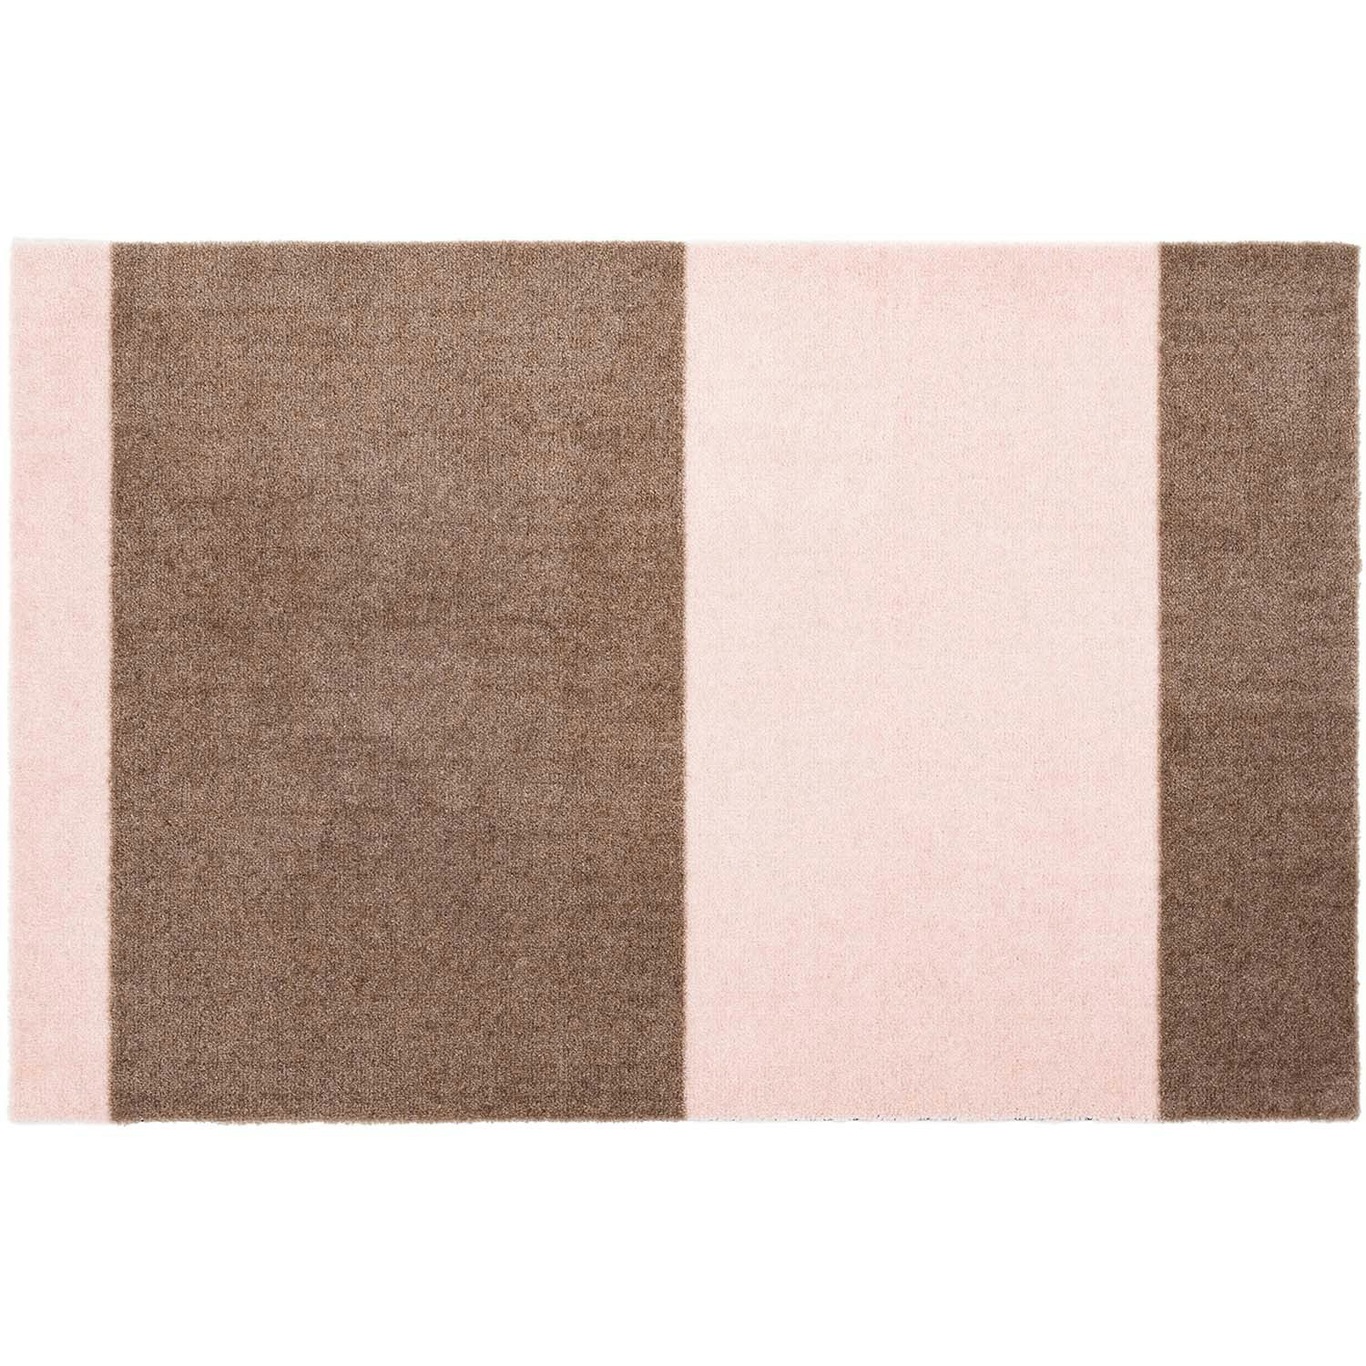 Stripes Matta Sand/Light Rose, 60x90 cm